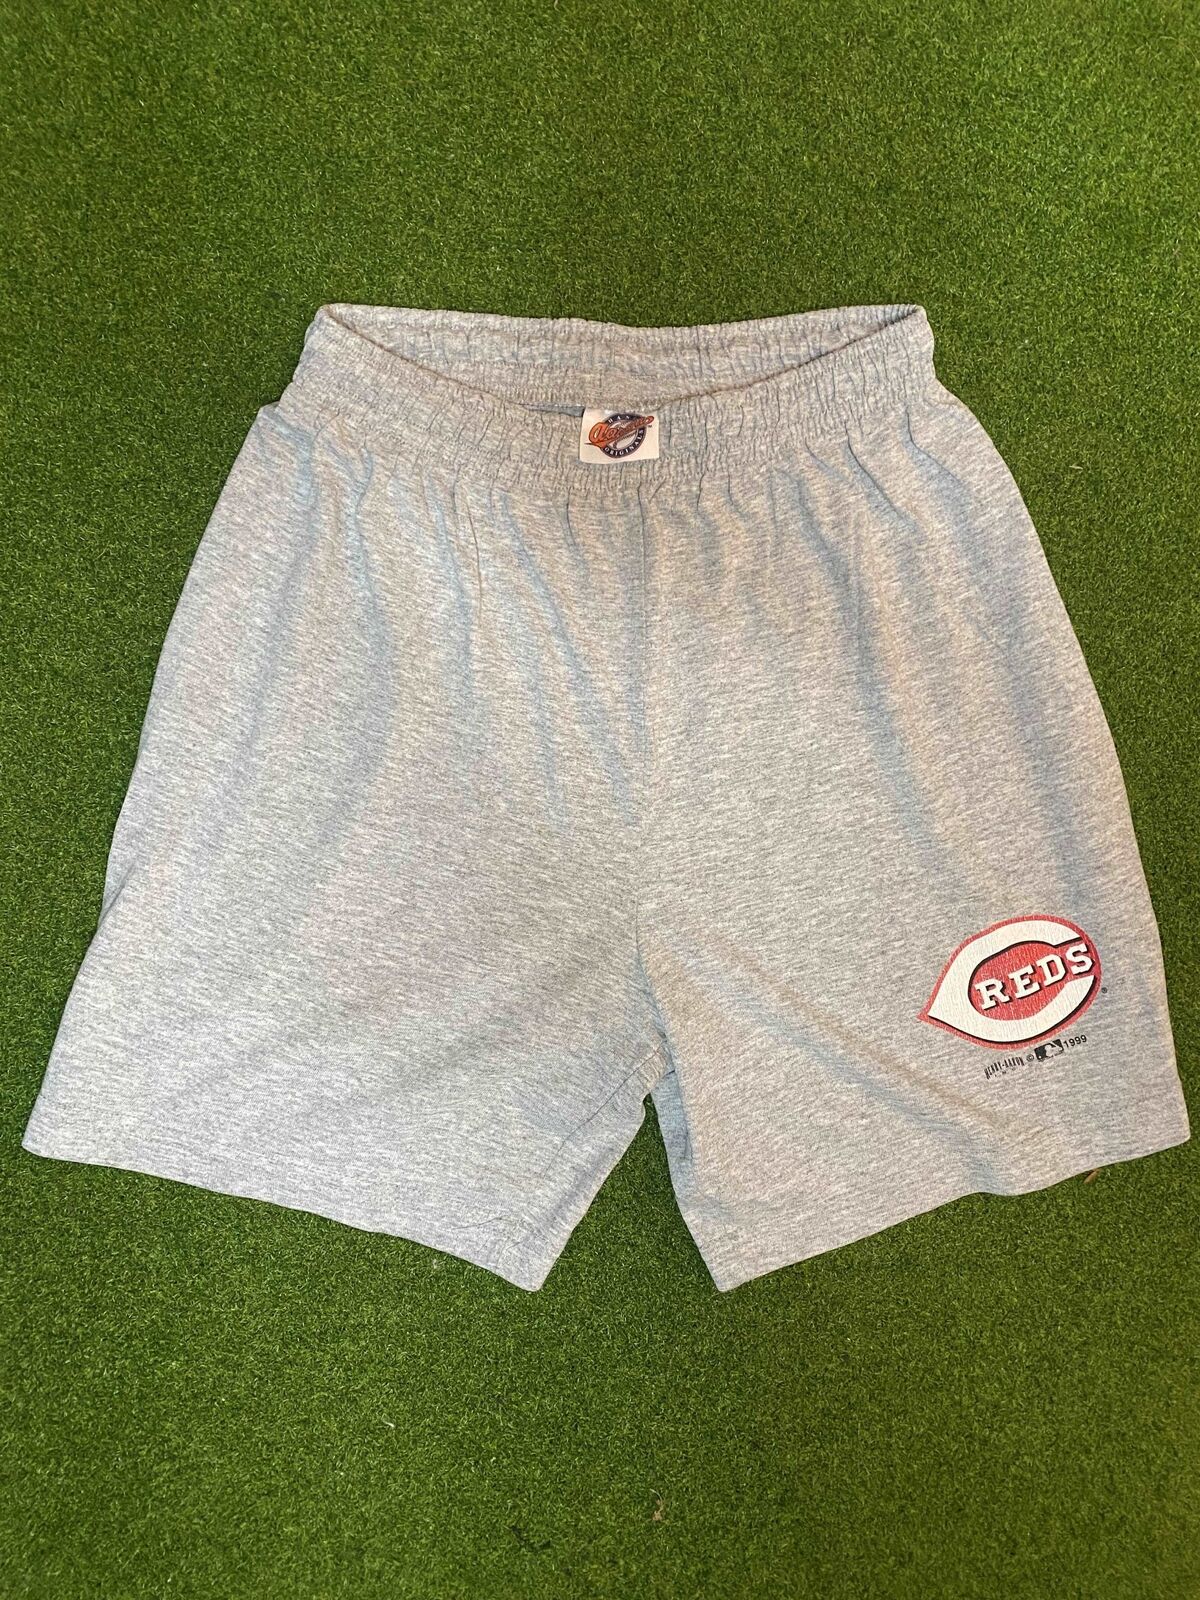 1999 Cincinnati Reds - Vintage MLB Shorts (Youth Large)